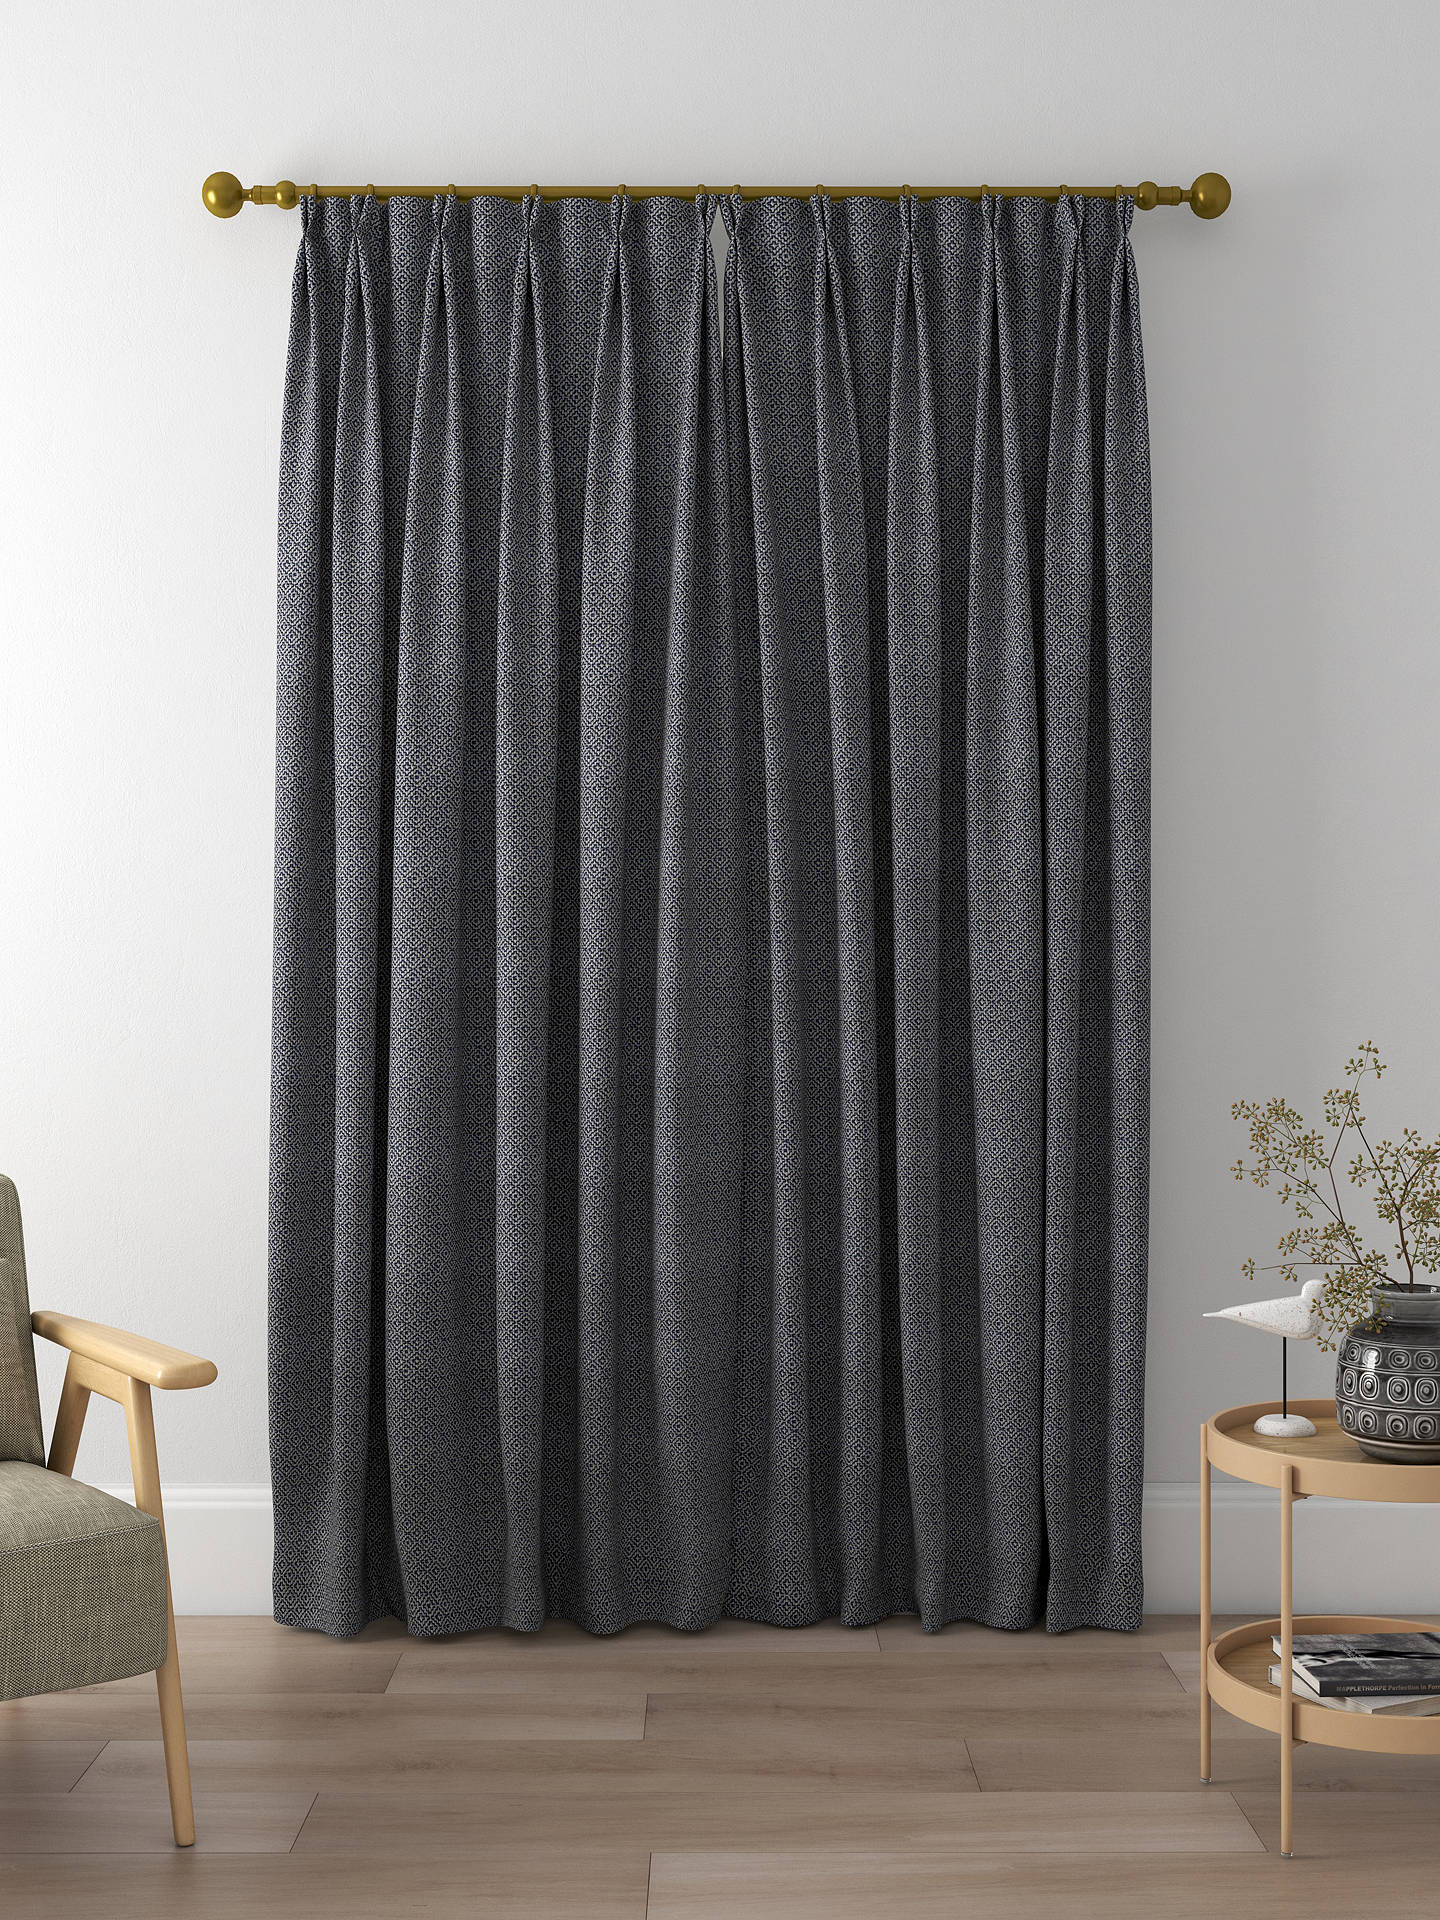 Sanderson Linden Made to Measure Curtains, Indigo